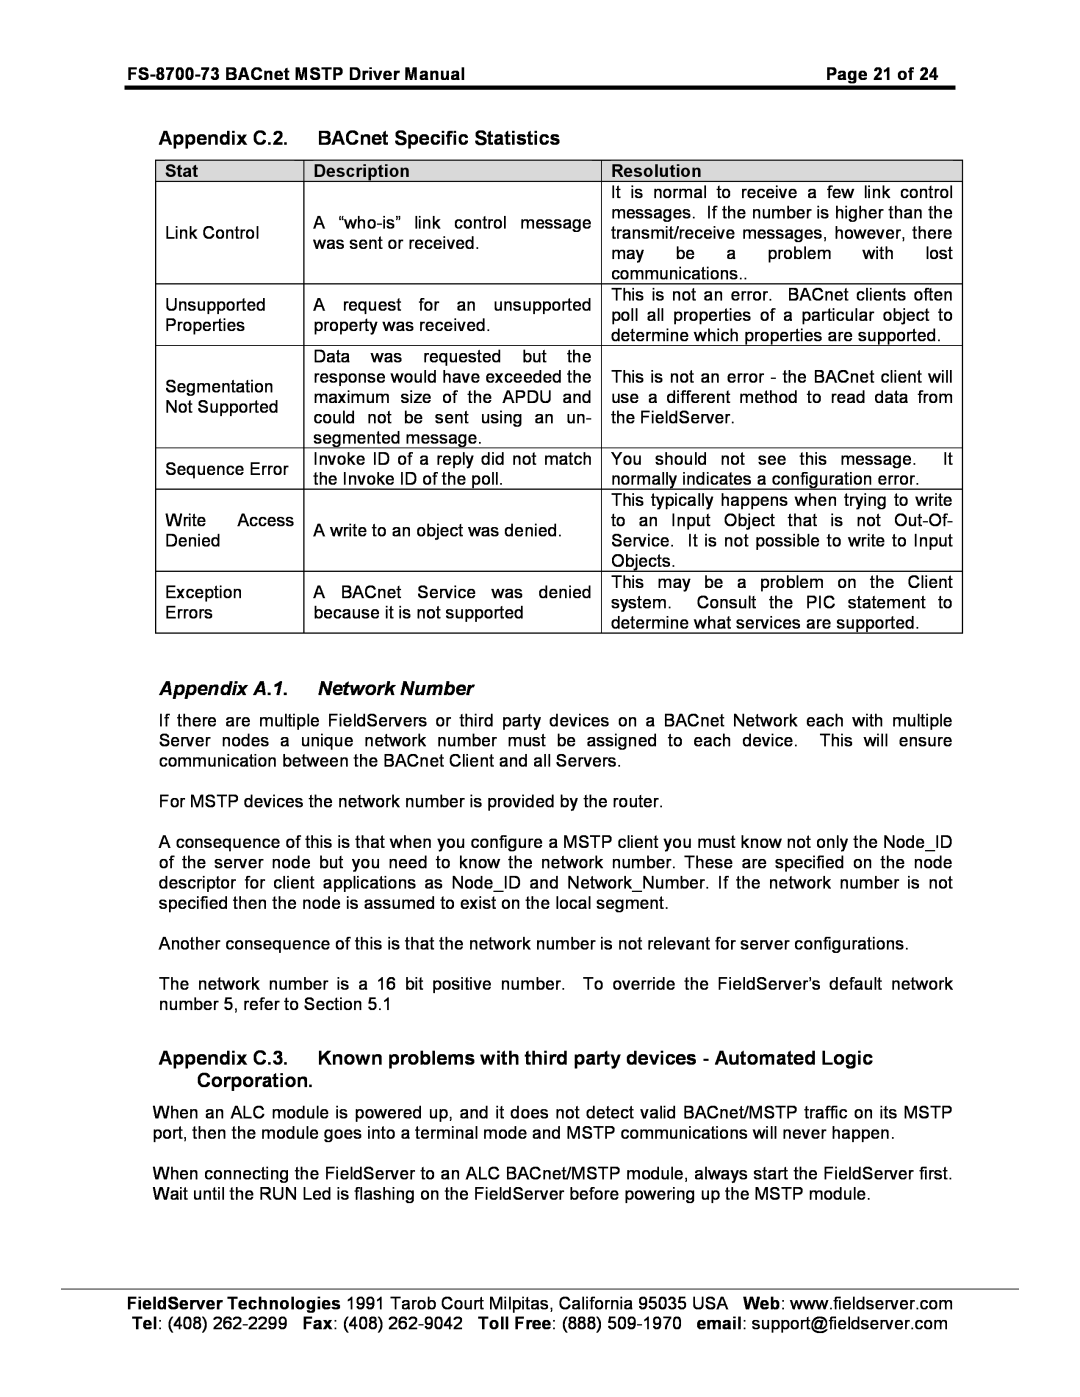 FieldServer FS-8700-73 instruction manual Appendix C.2, BACnet Specific Statistics, Appendix A.1. Network Number 